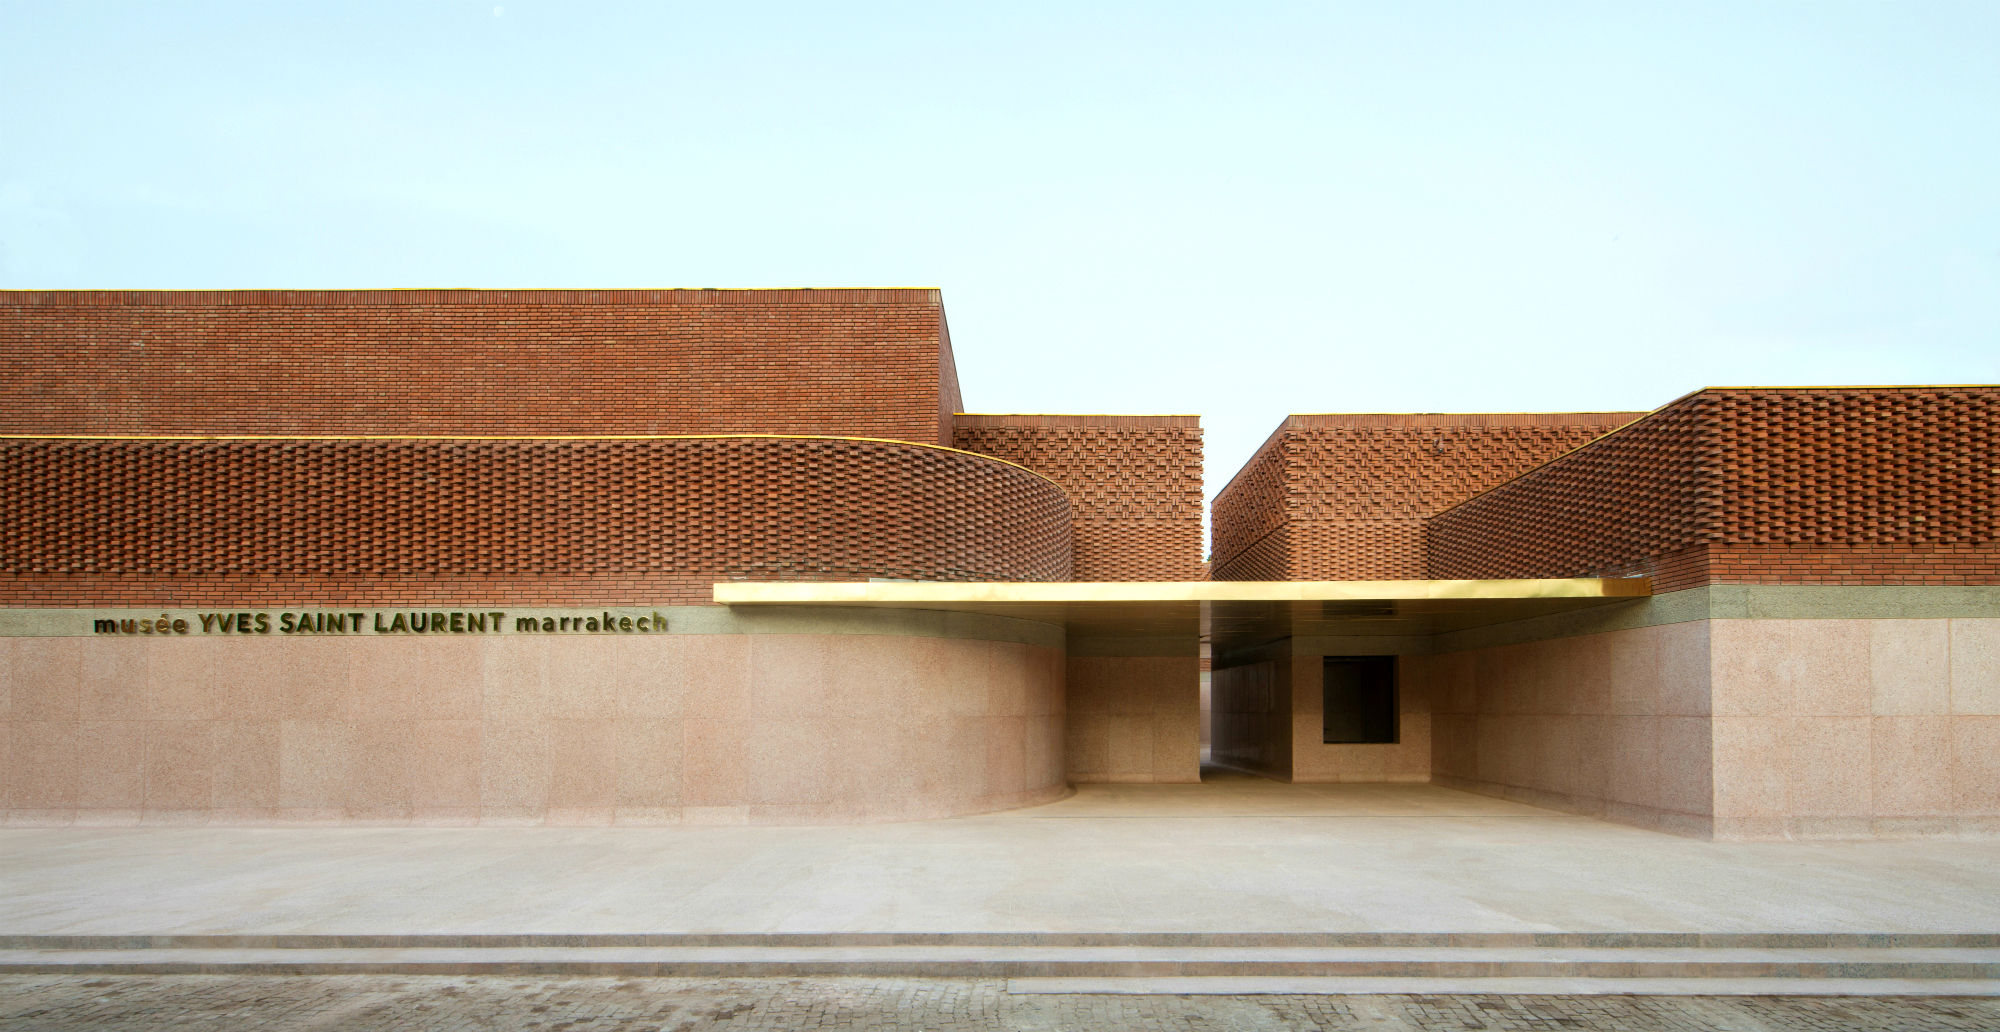 Musée Yves Saint Laurent in Marrakech honours the late designer